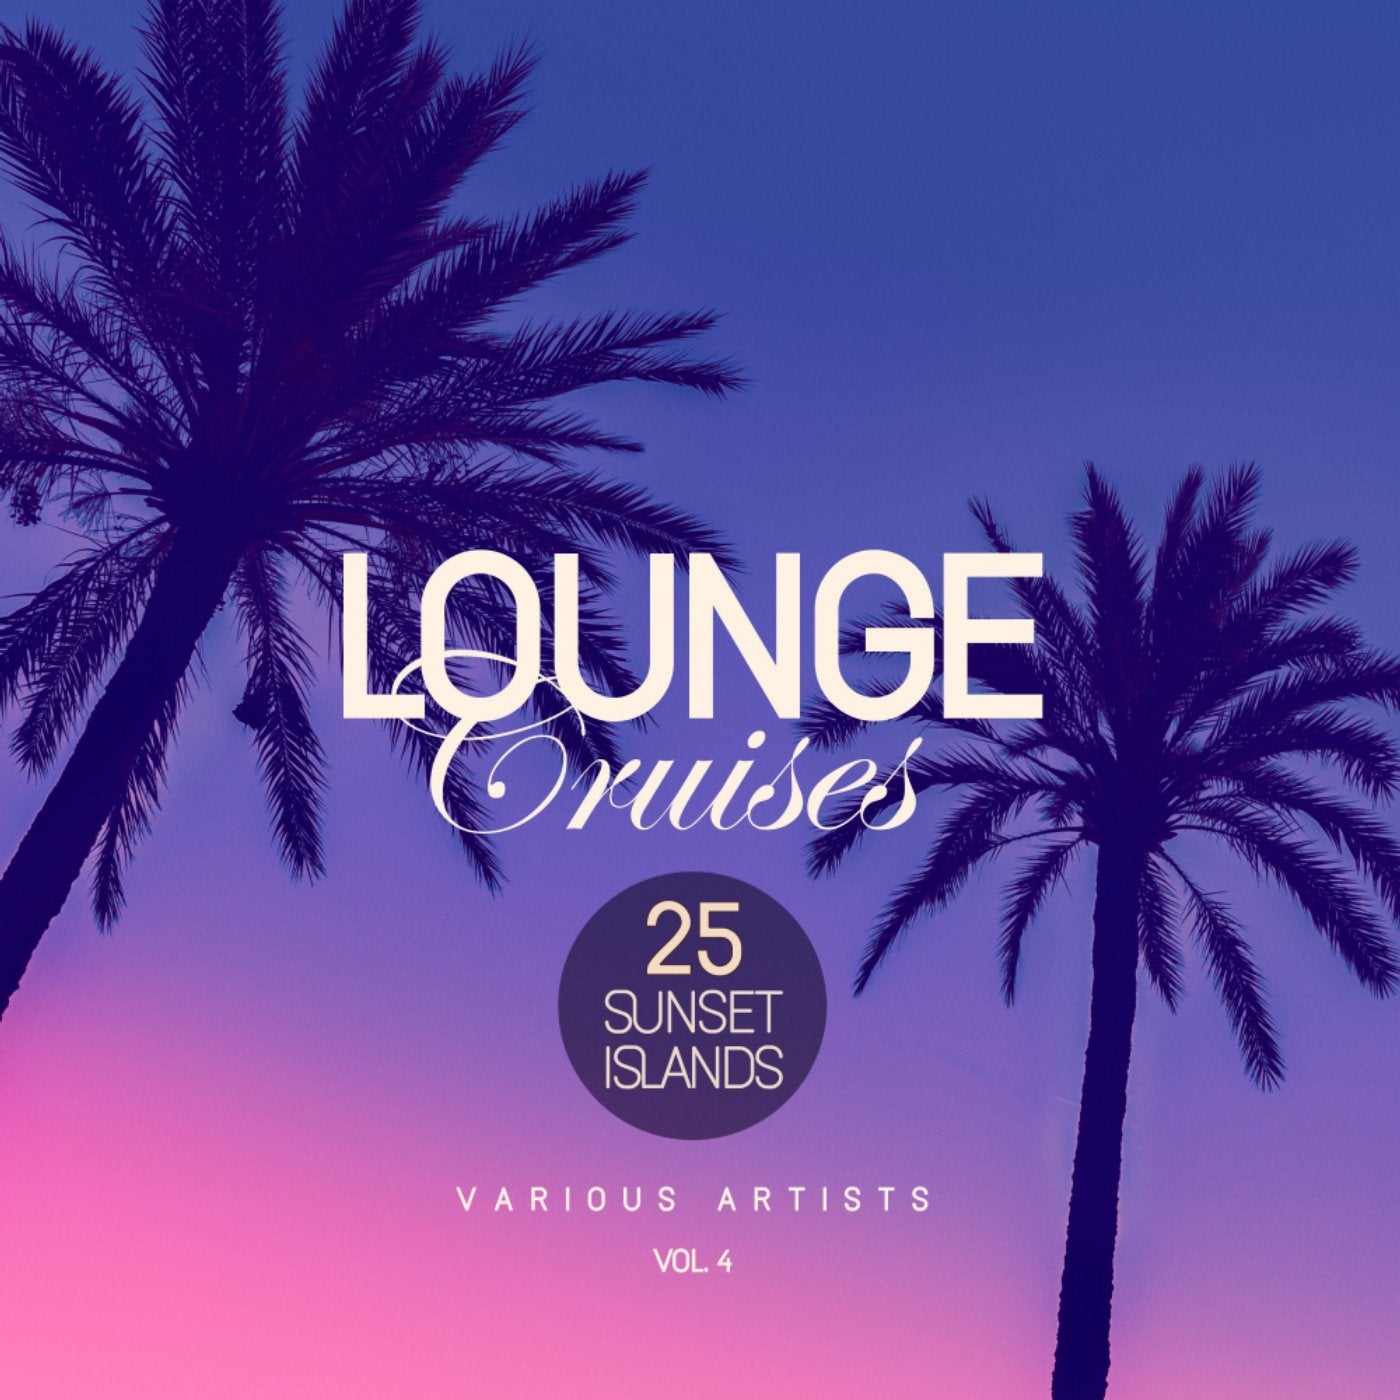 Lounge Cruises, Vol. 4 (25 Sunset Islands)